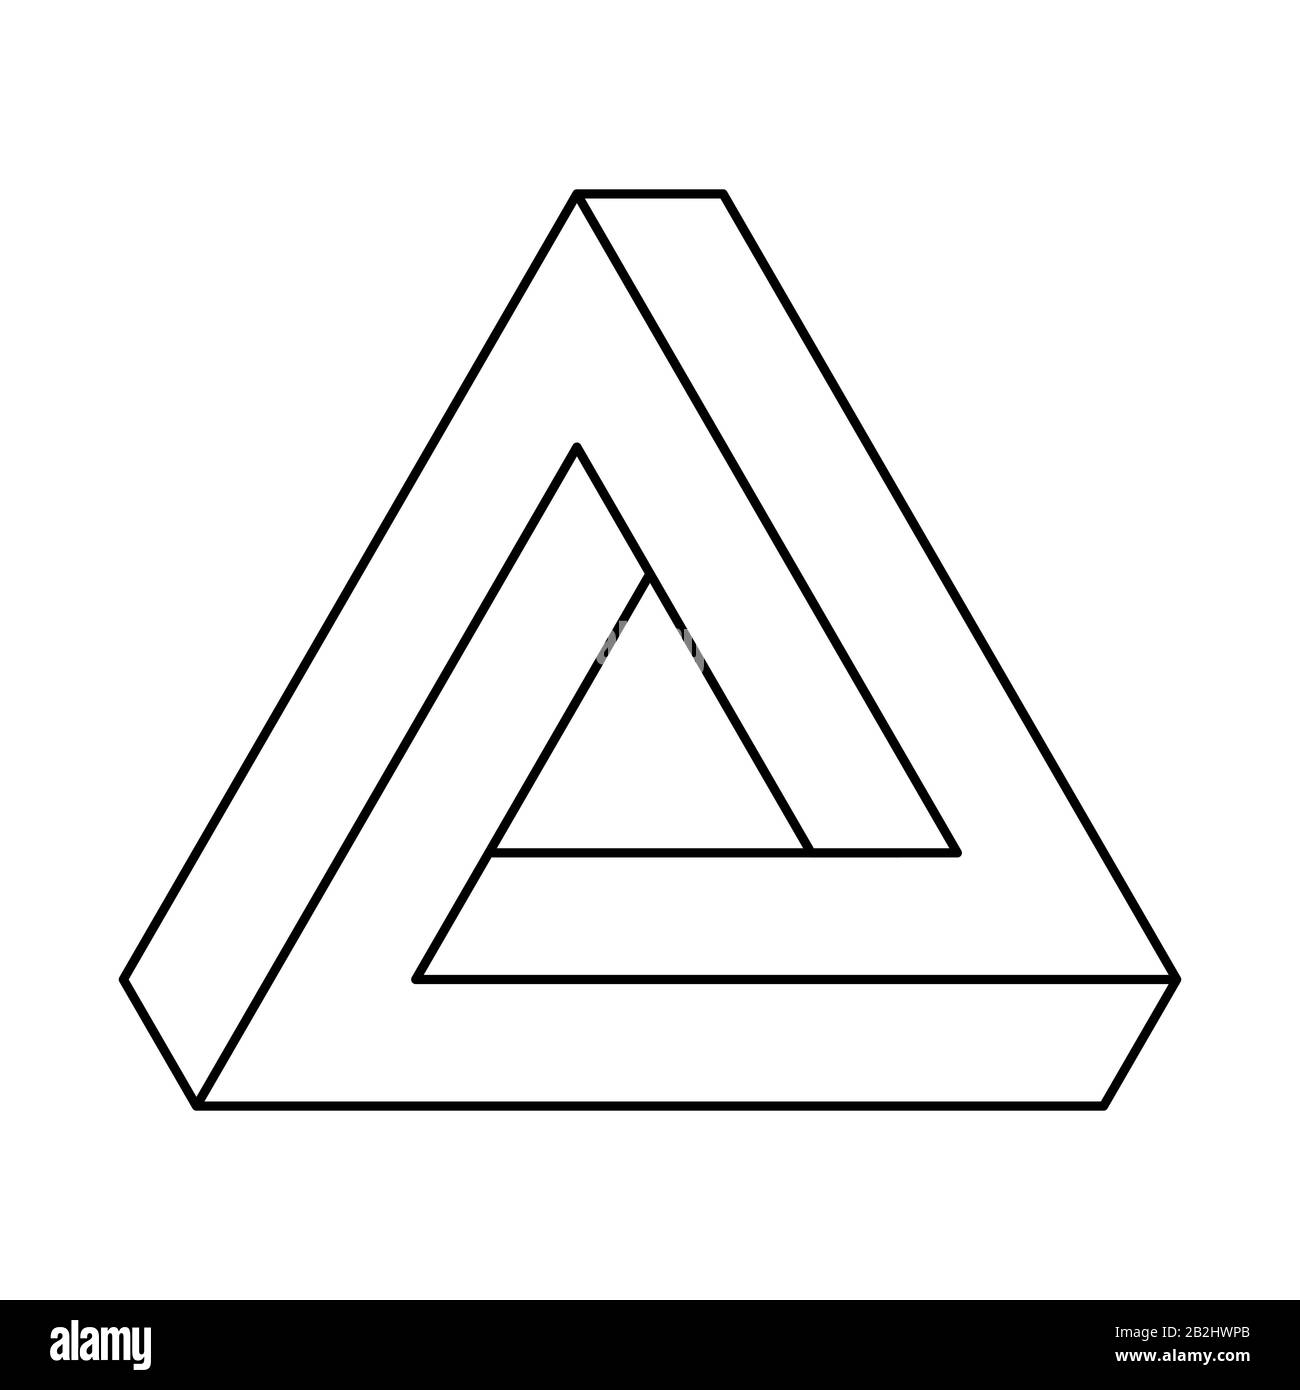 Penrose Triangles Vector Art & Graphics | freevector.com